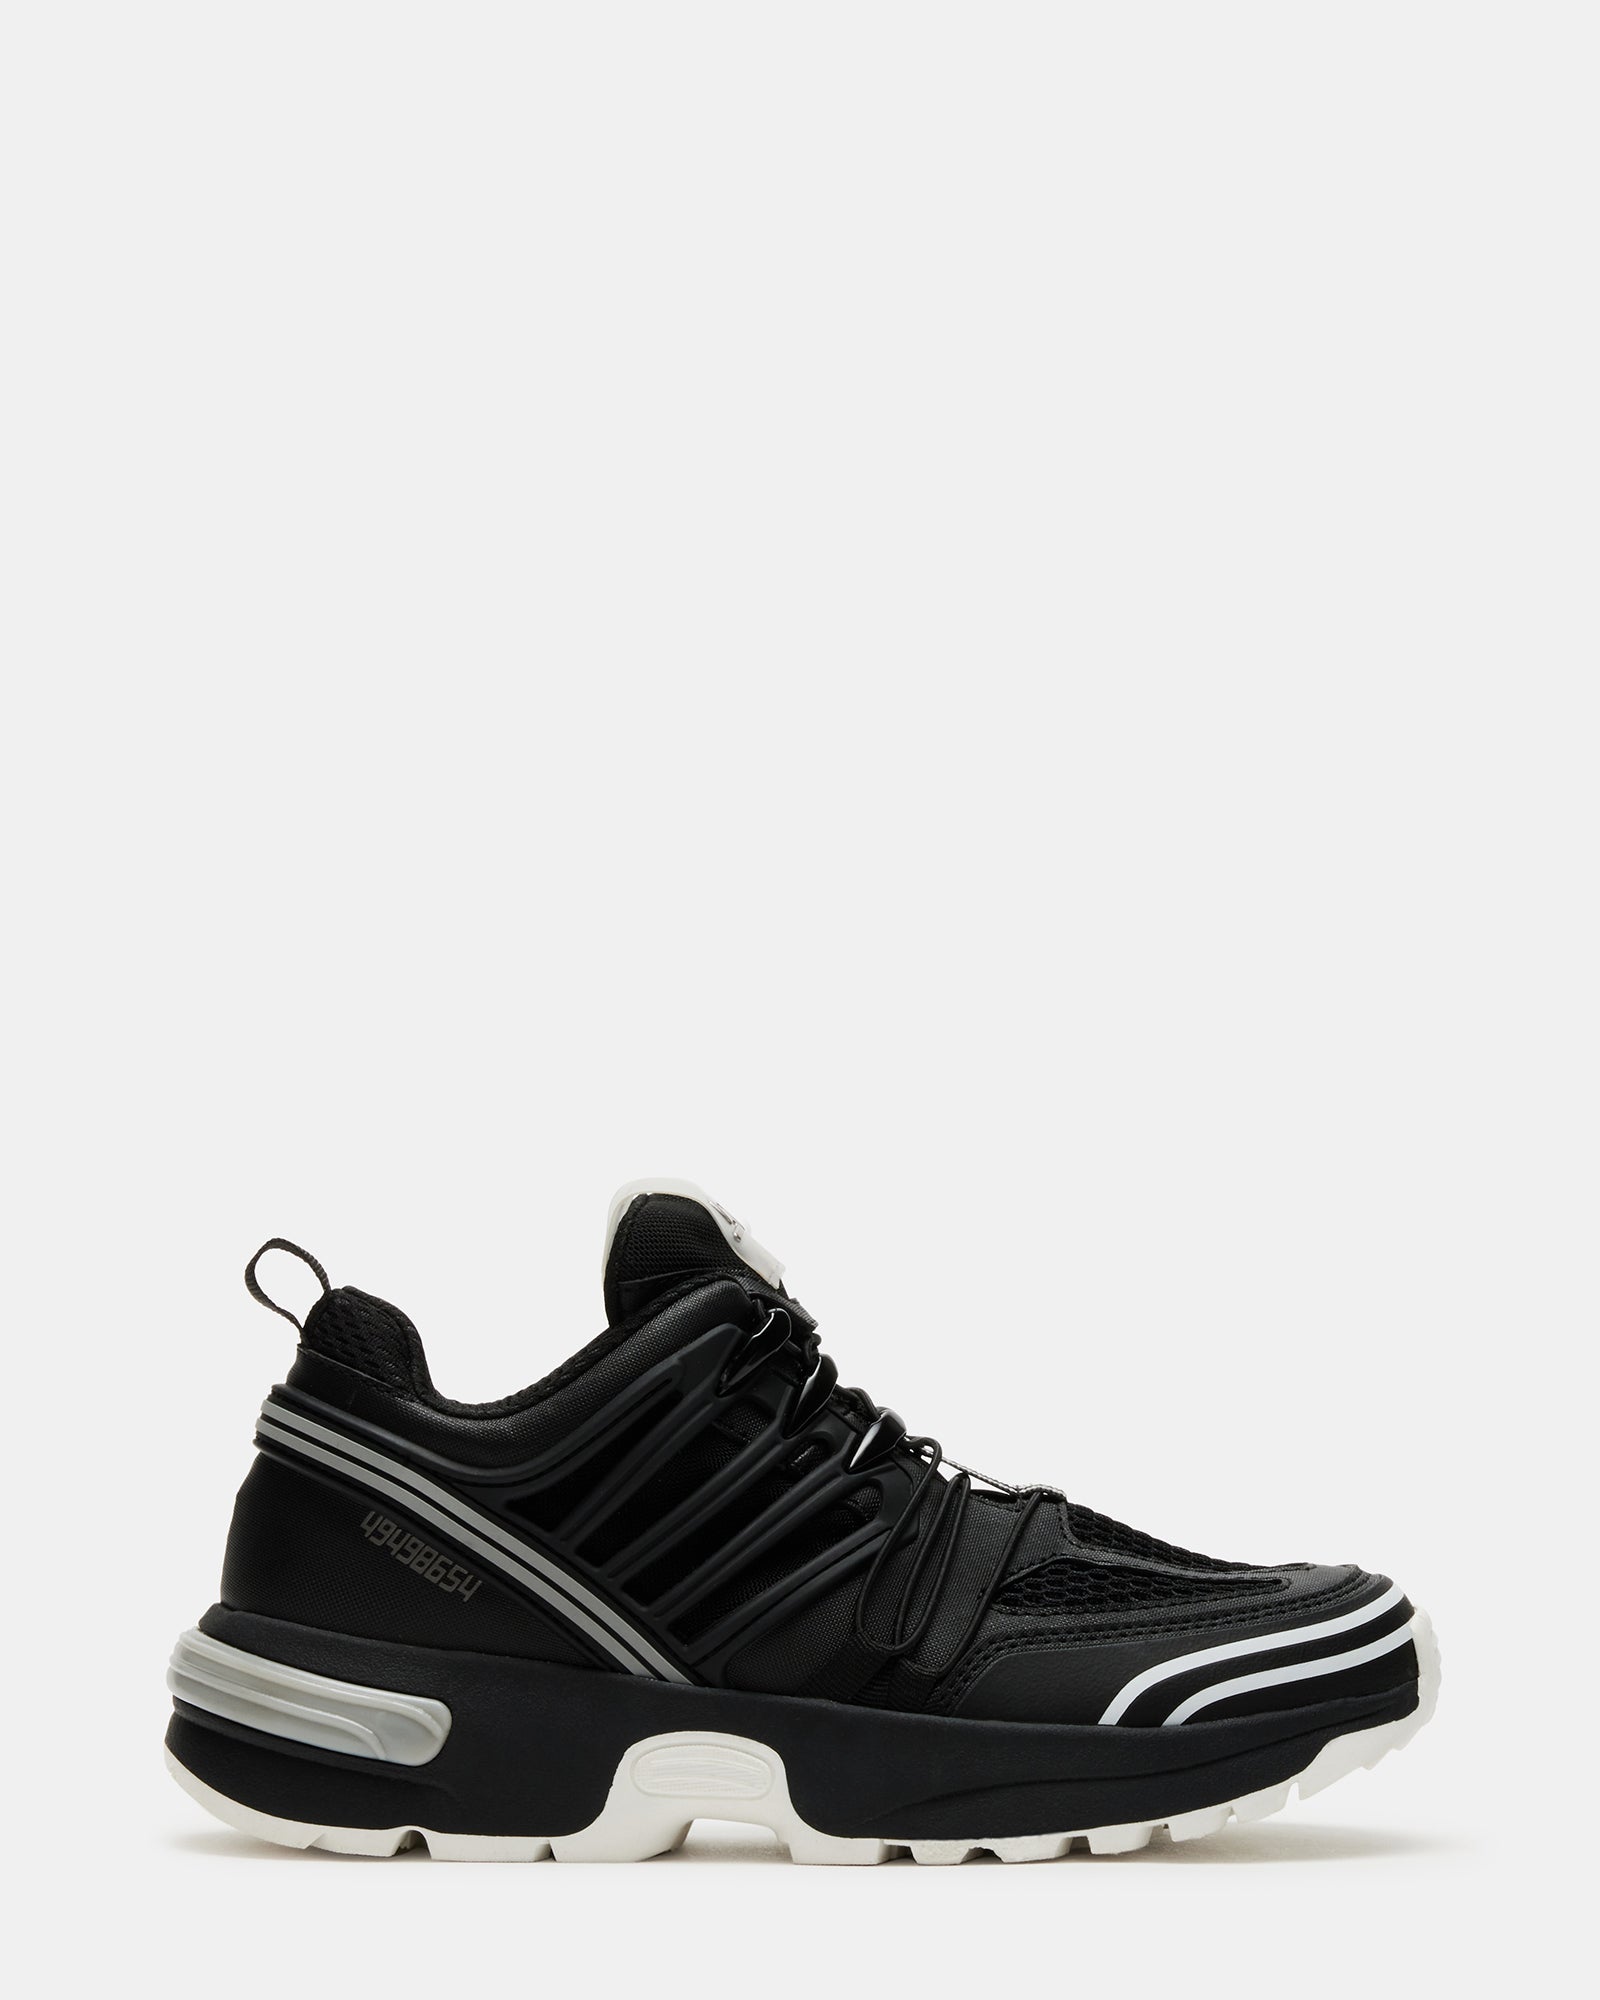 Adidas X Karlie Kloss - Kk X9000 Boost - GY6343 Women's Sneaker Sports Run  Shoes | eBay